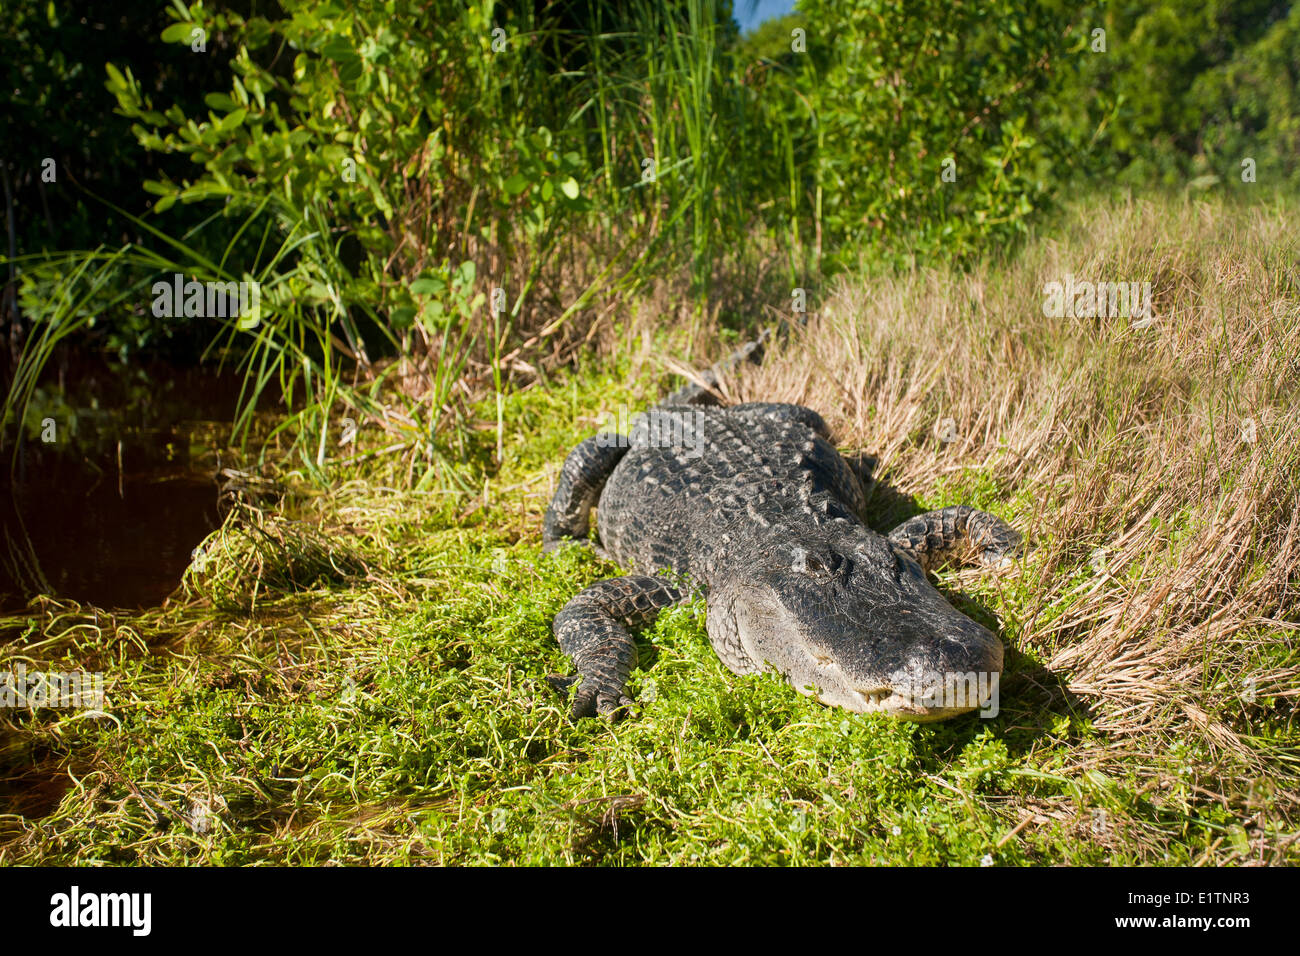 American alligator. Alligator mississippiensis, Everglades, Florida, USA Stock Photo